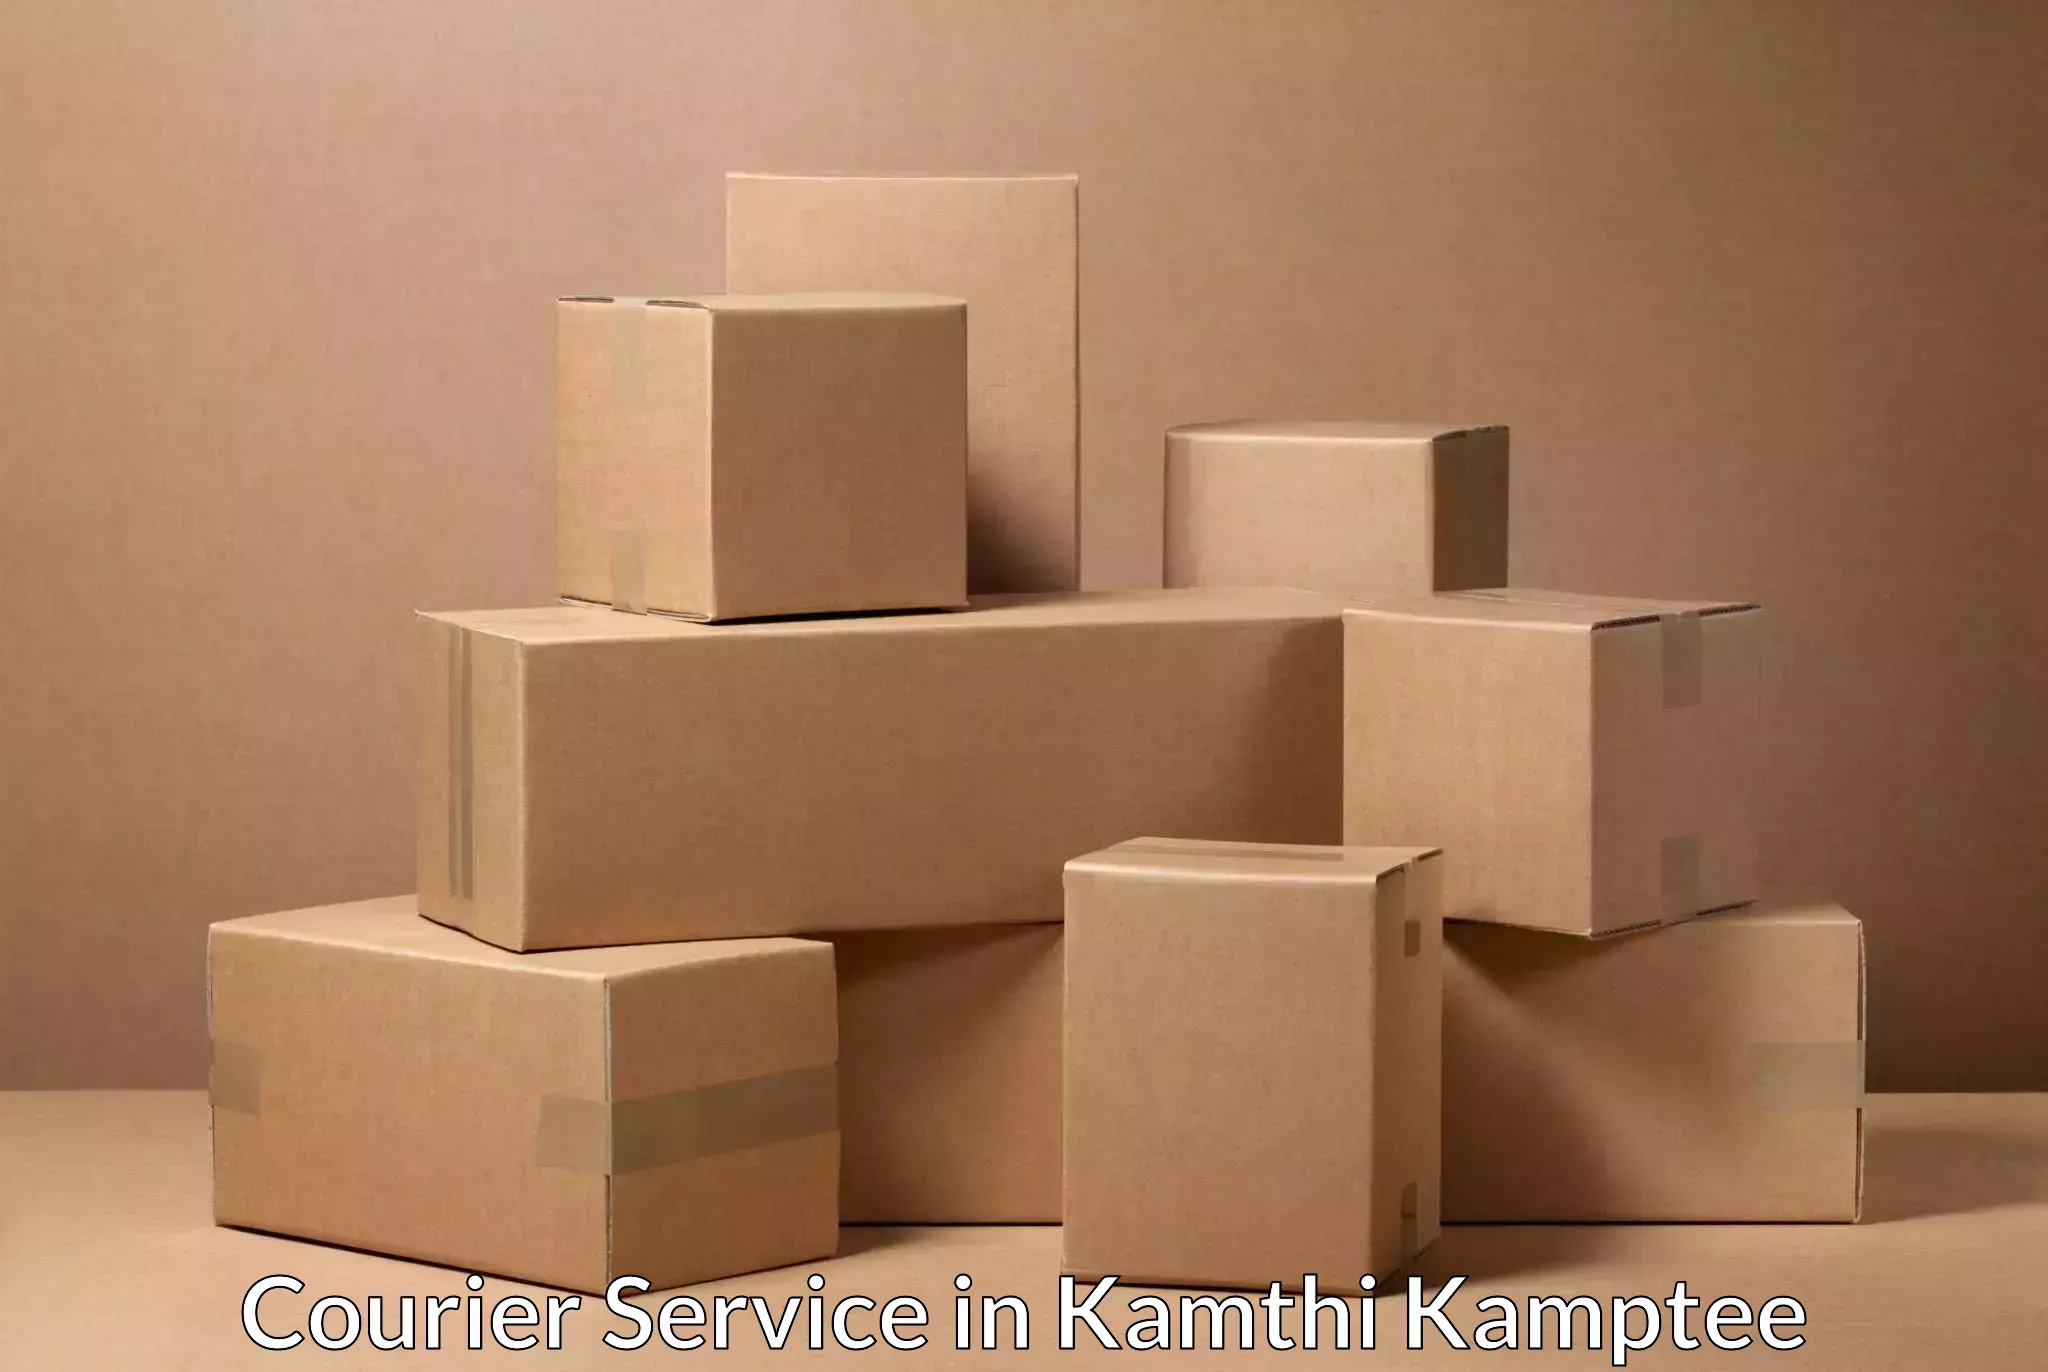 Express postal services in Kamthi Kamptee